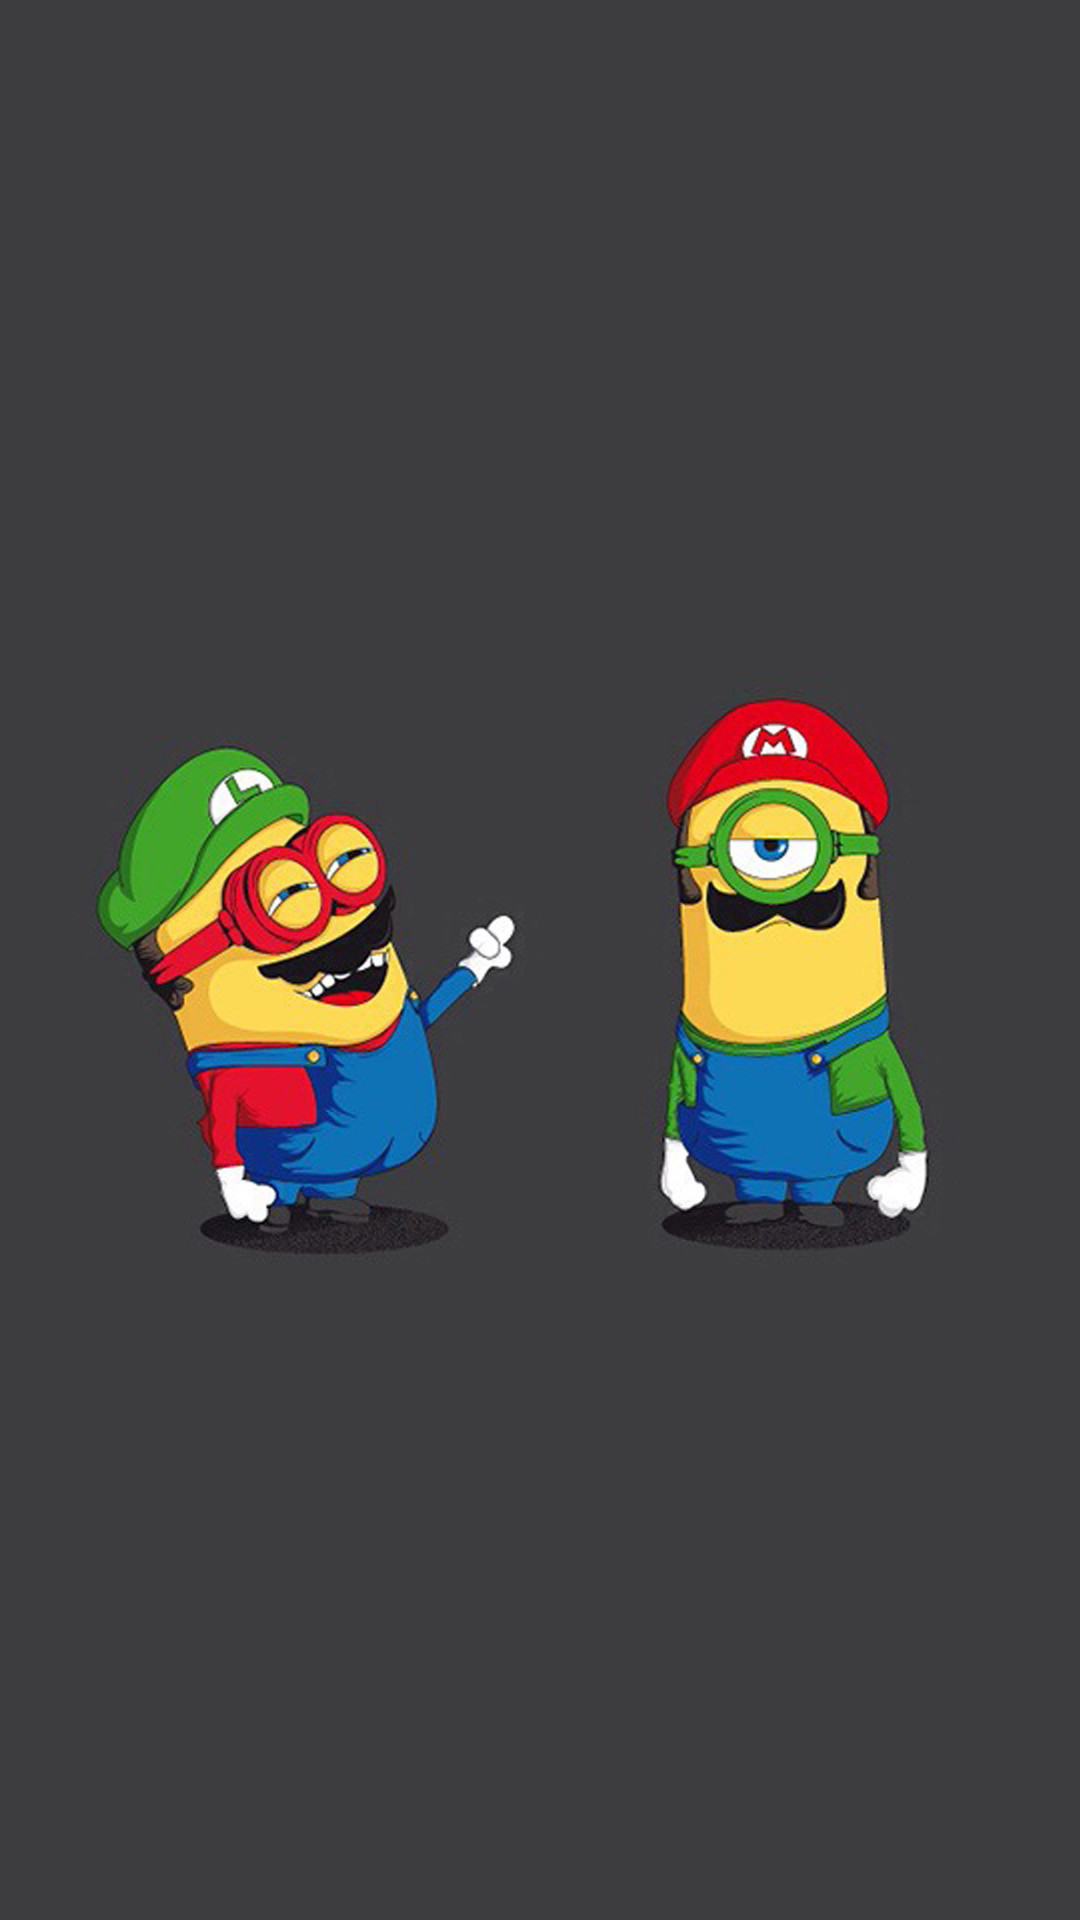 1080x1920 Funny Mario And Luigi Minions HD Wallpaper iPhone 6 plus